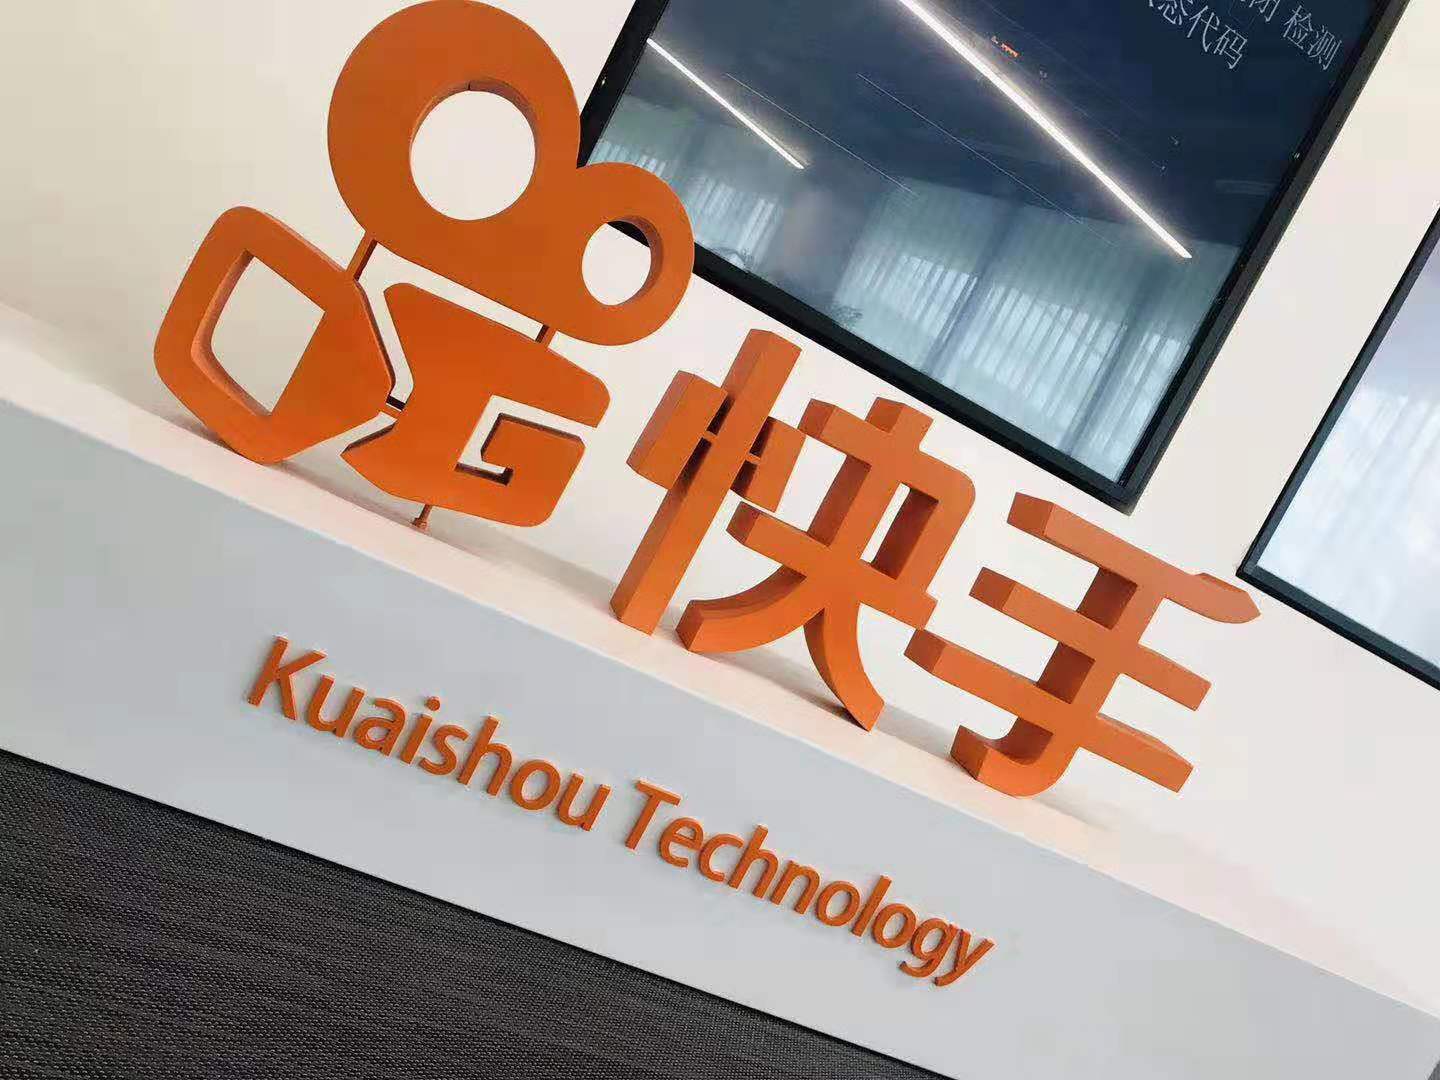 Big US funds stake claim on quarter of Kuaishou’s USD 5.4 billion IPO